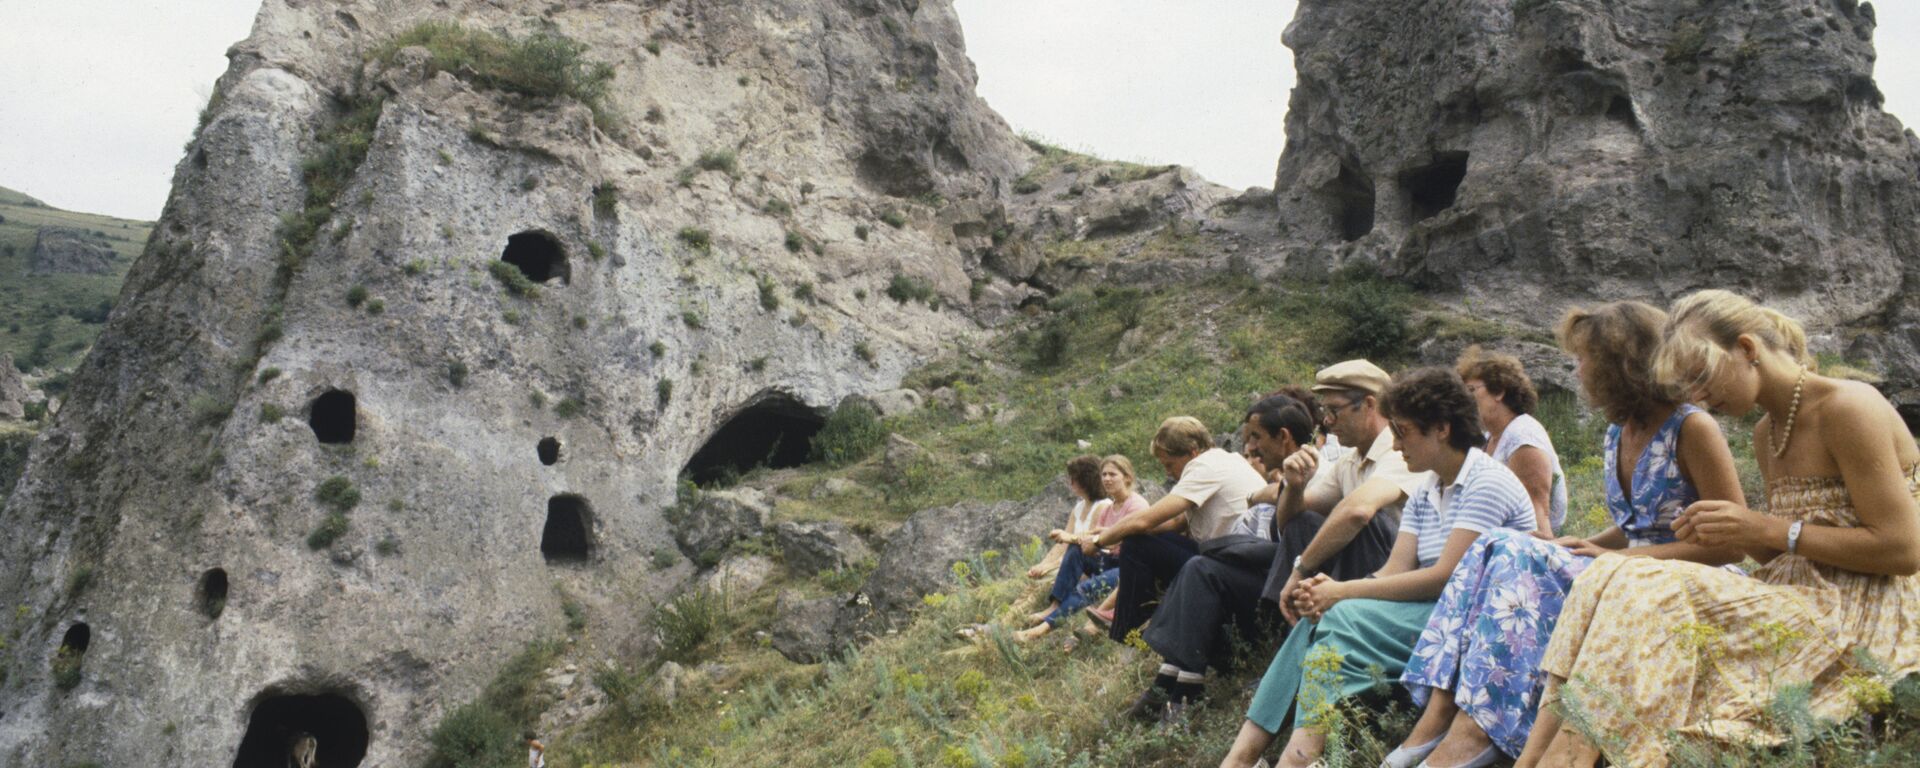 Туристы в горах Армении - Sputnik Արմենիա, 1920, 05.10.2021